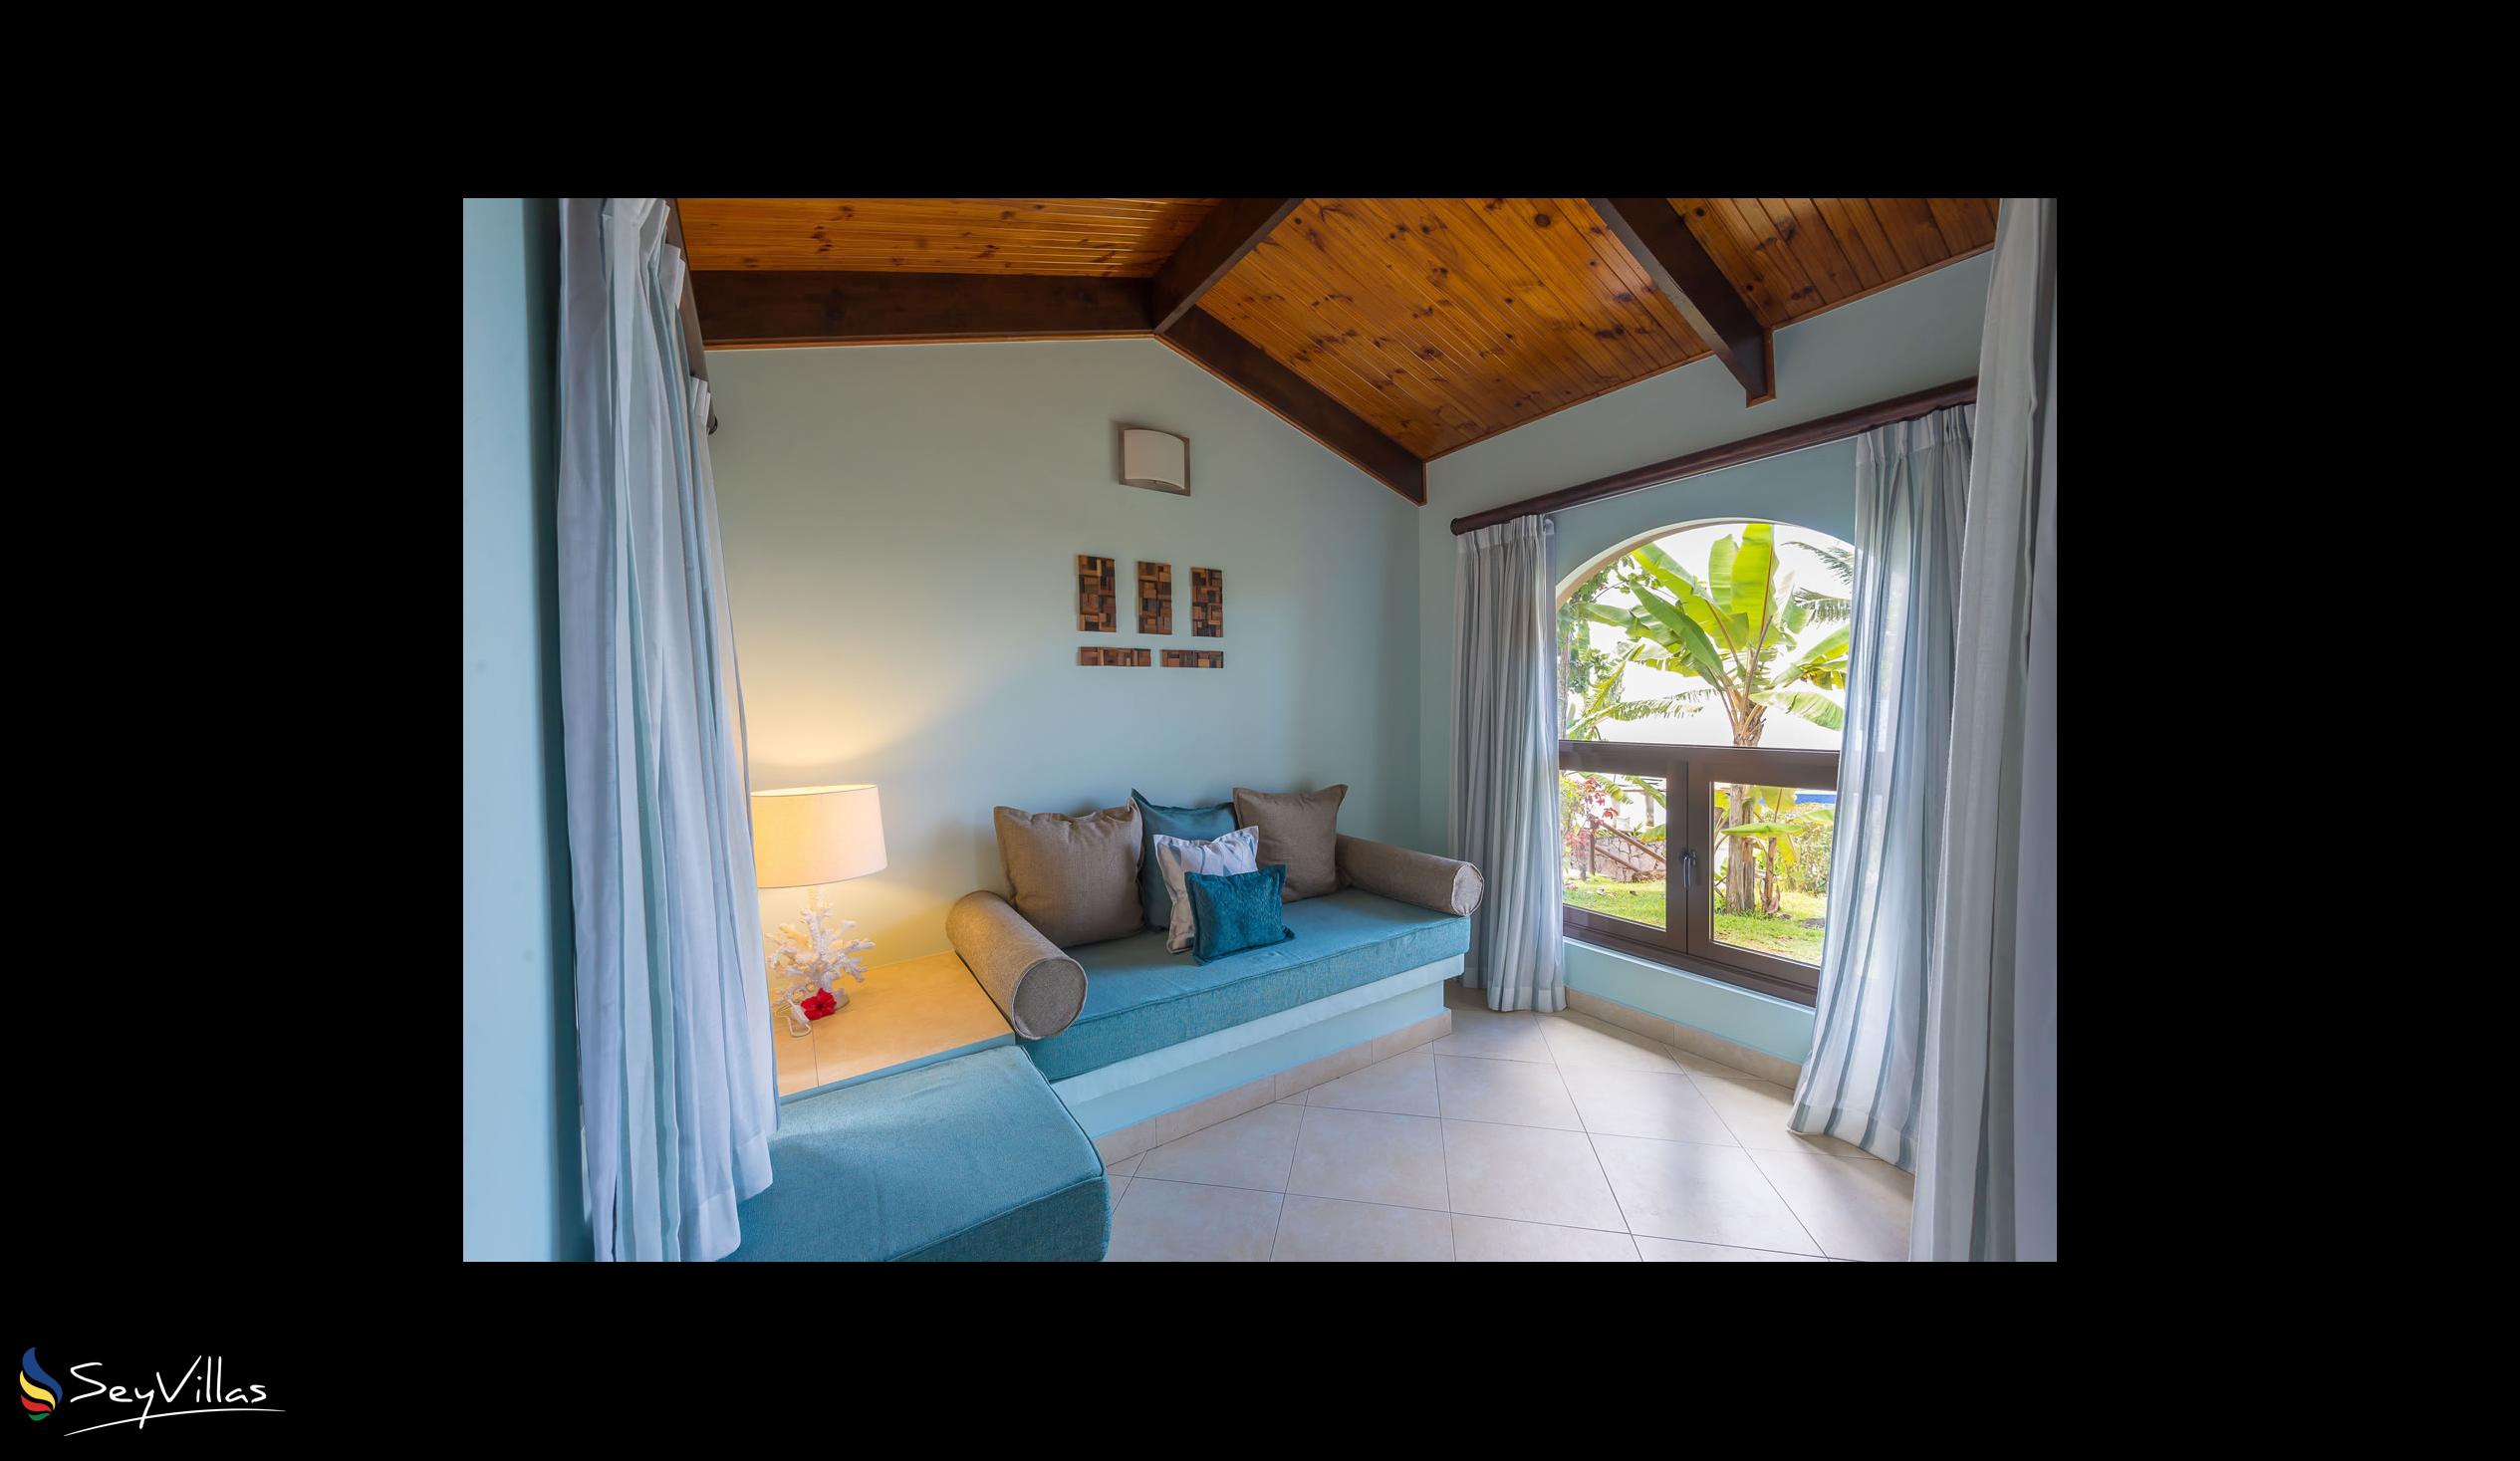 Photo 52: Coco de Mer & Black Parrot Suites - Standard - Praslin (Seychelles)